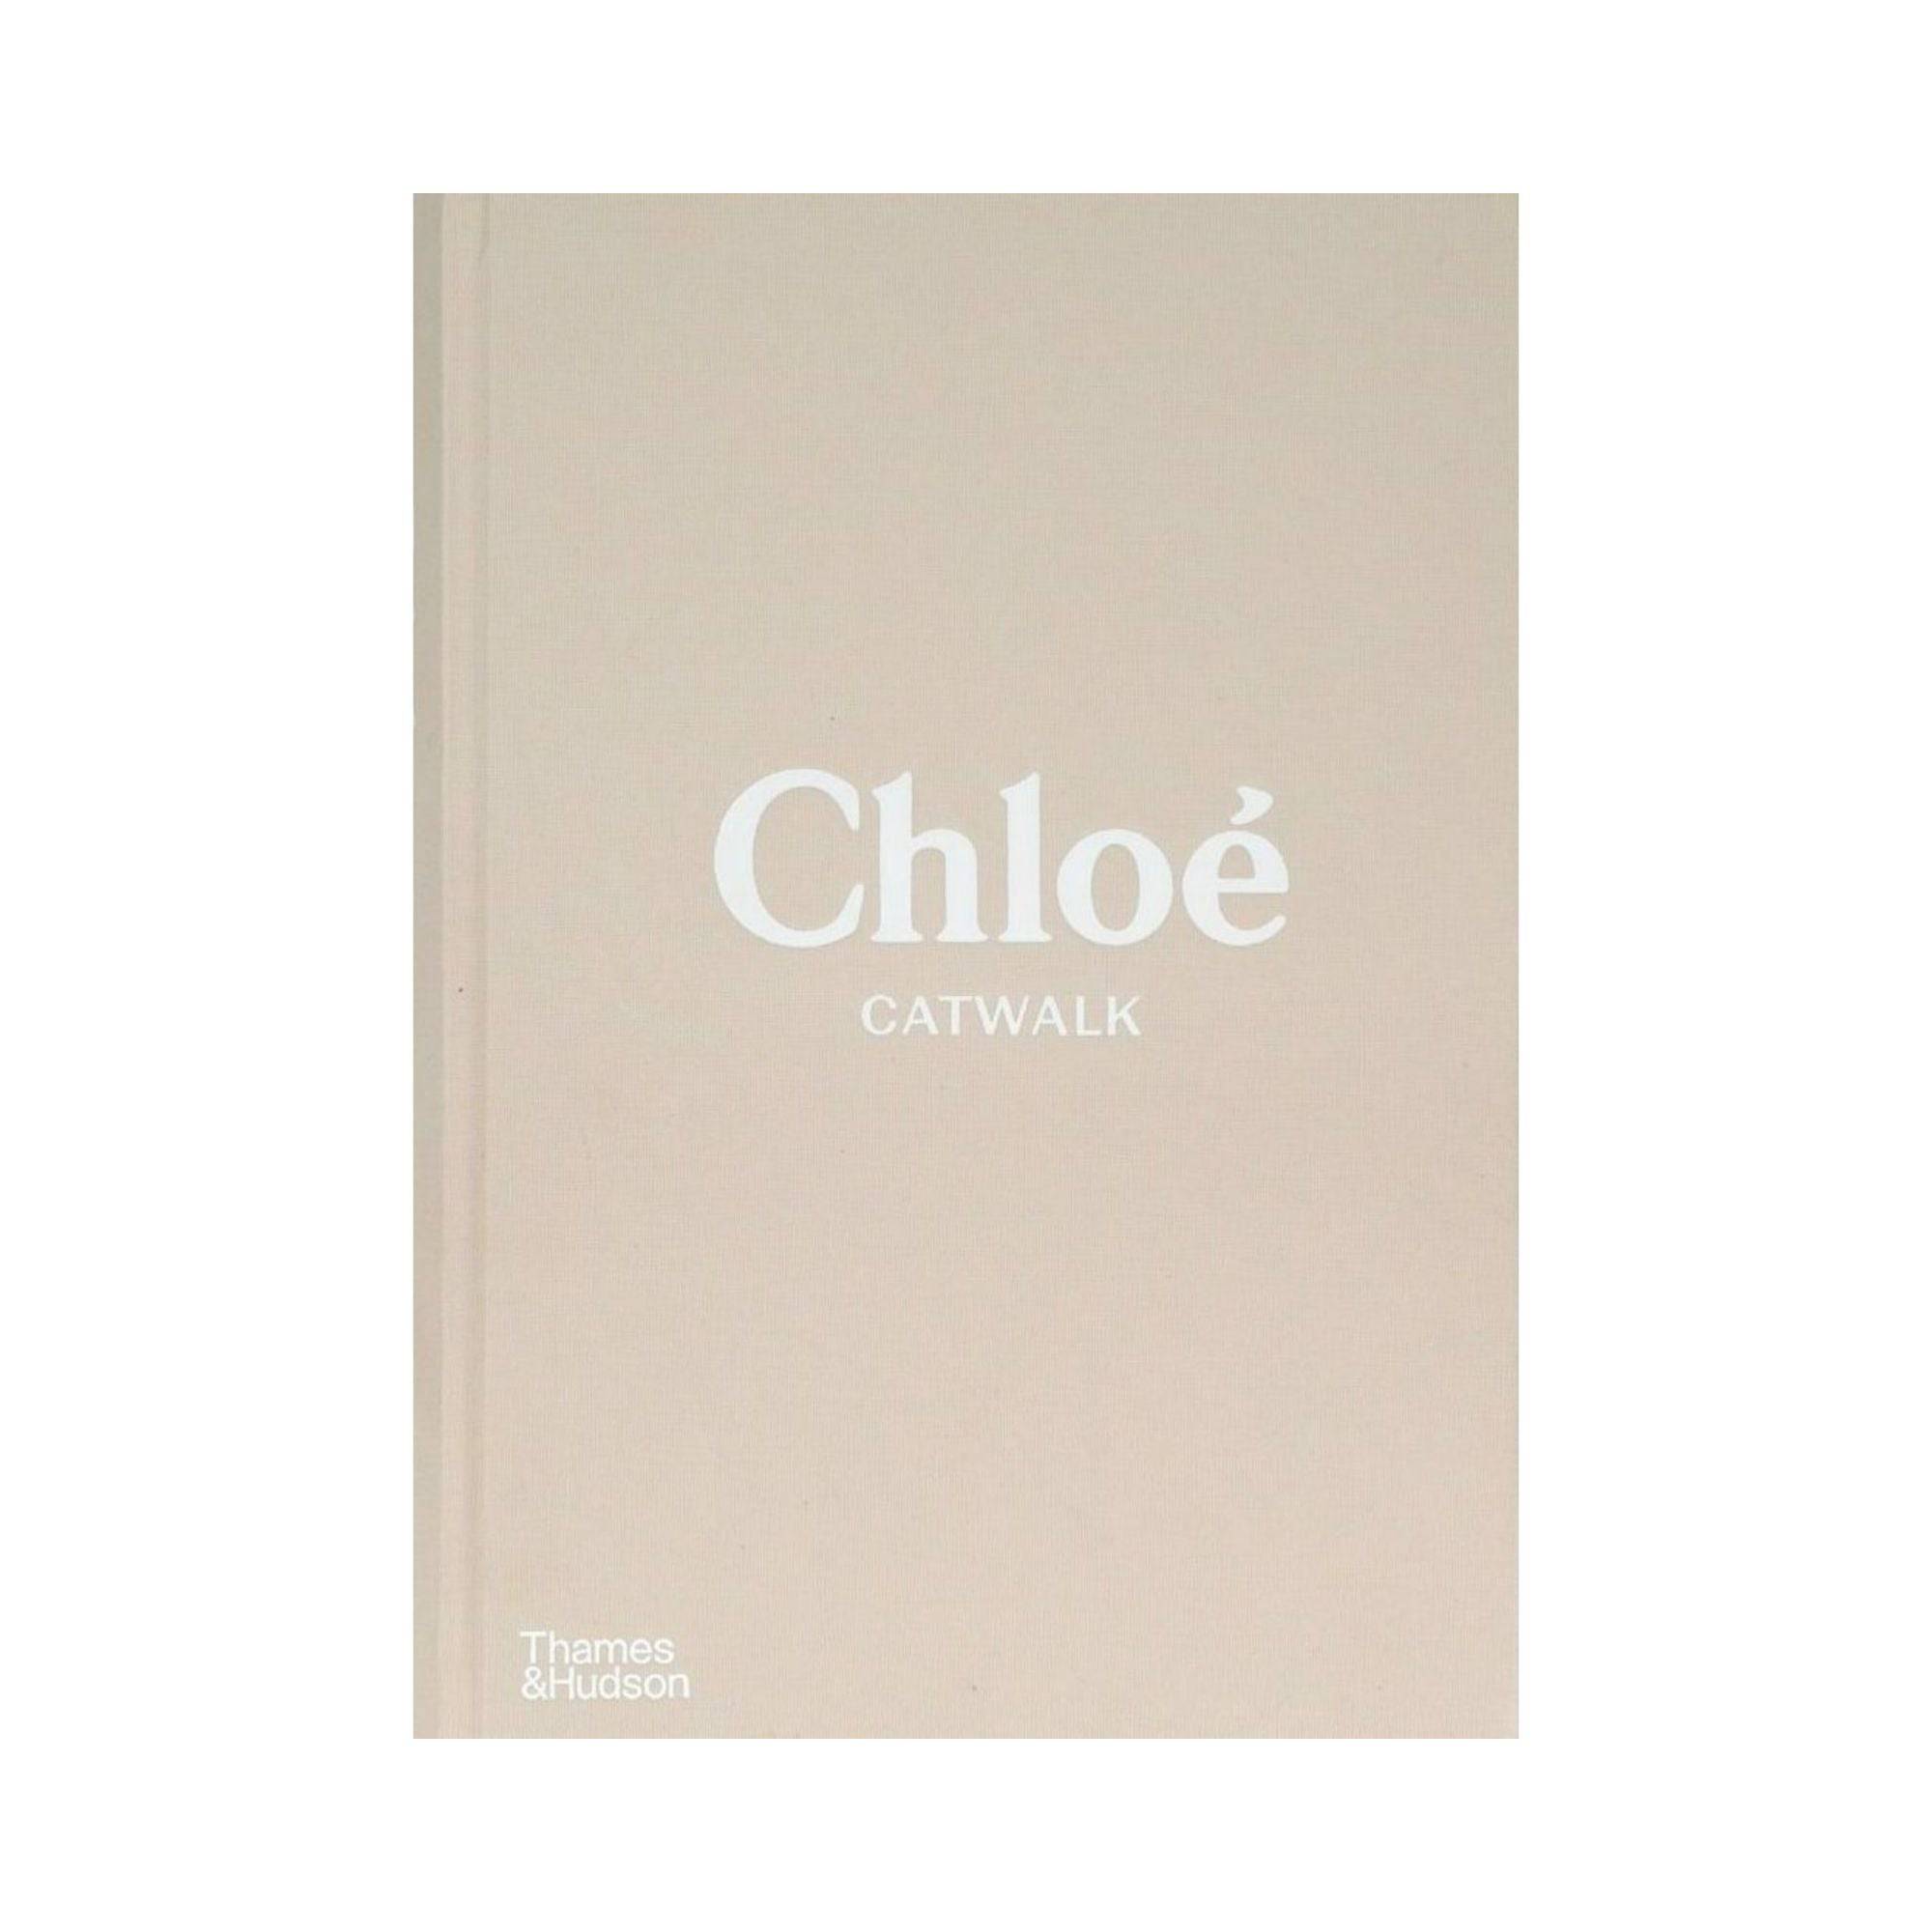 Chloé Catwalk - THAT COOL LIVING